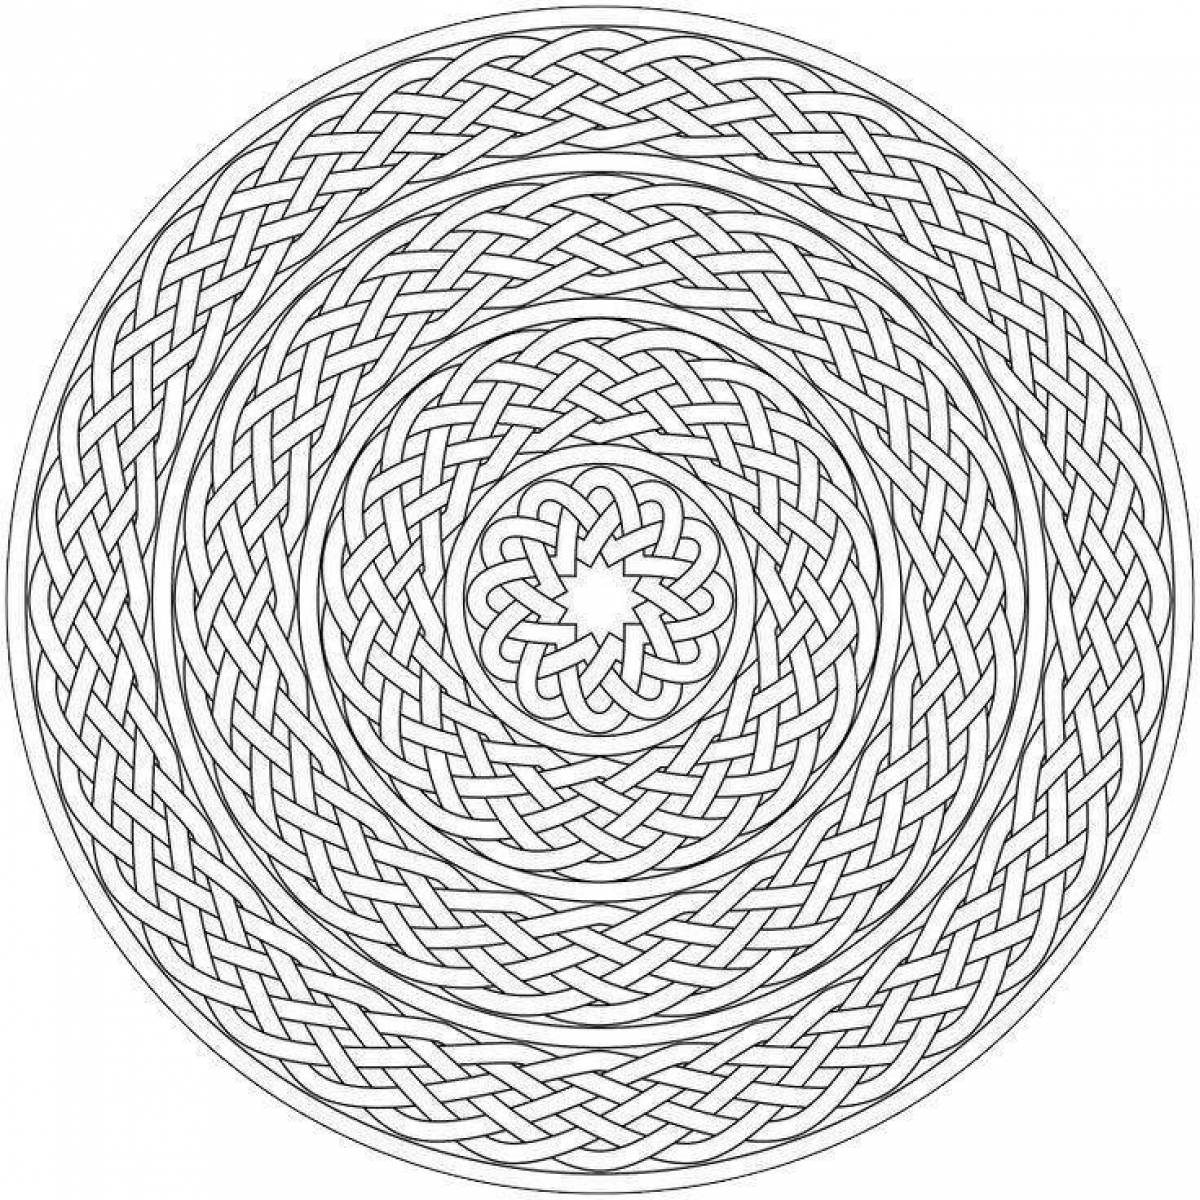 Coloring spiral pattern